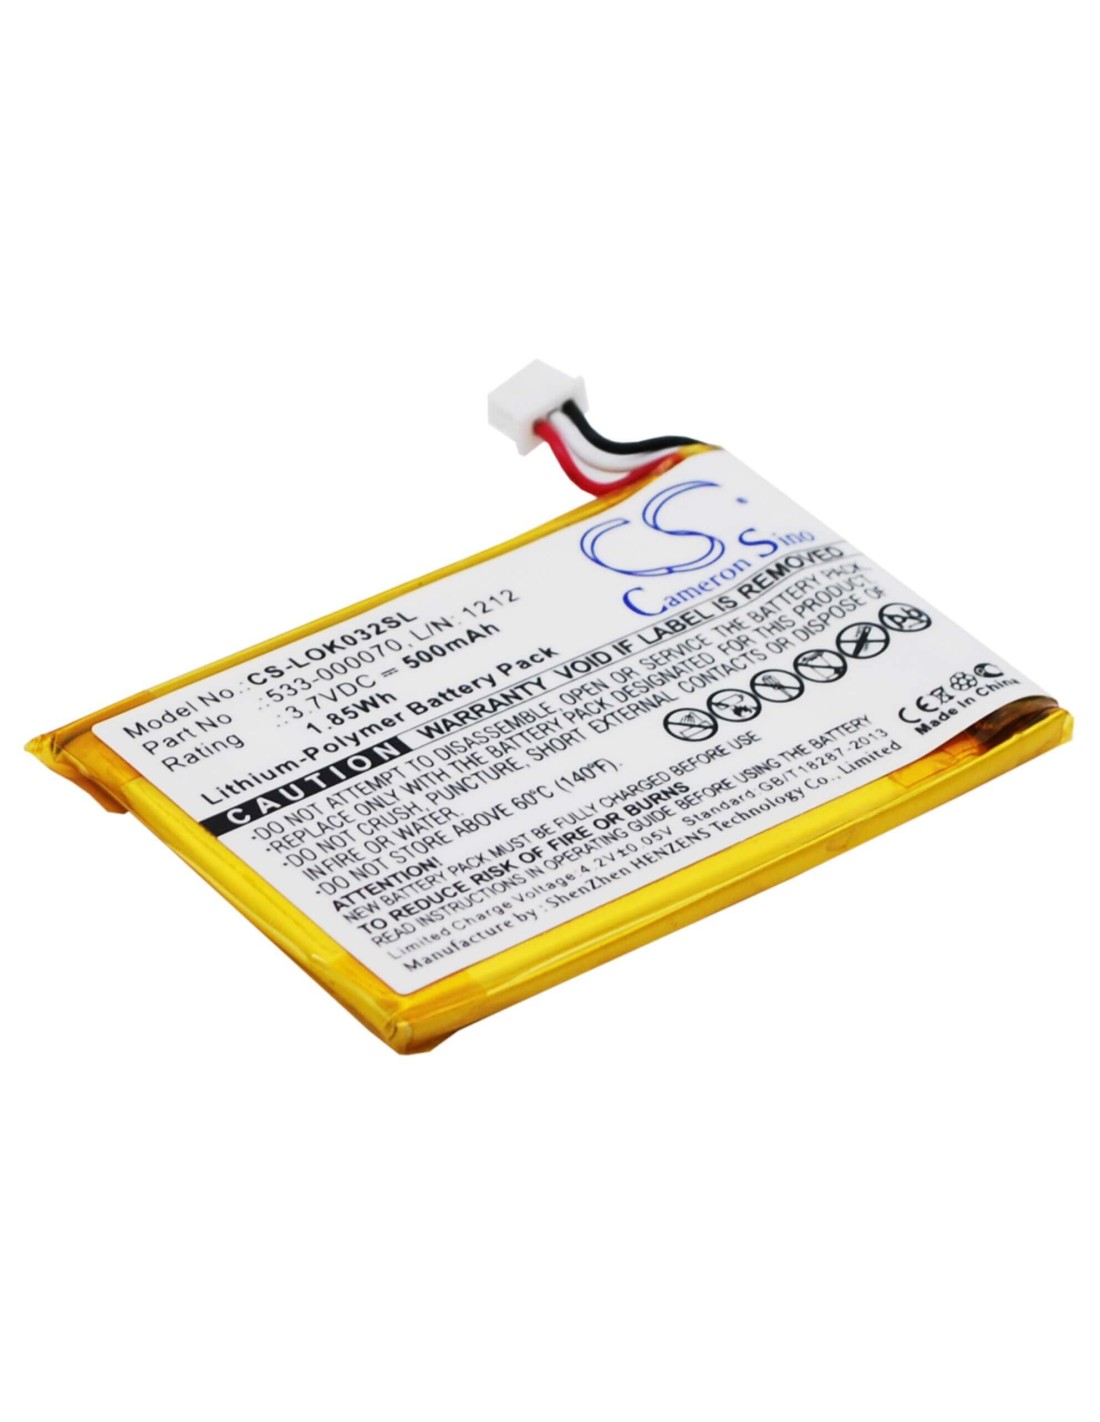 Battery for Logitech Ultratin Keyboard Cover, Y-r0032 3.7V, 500mAh - 1.85Wh